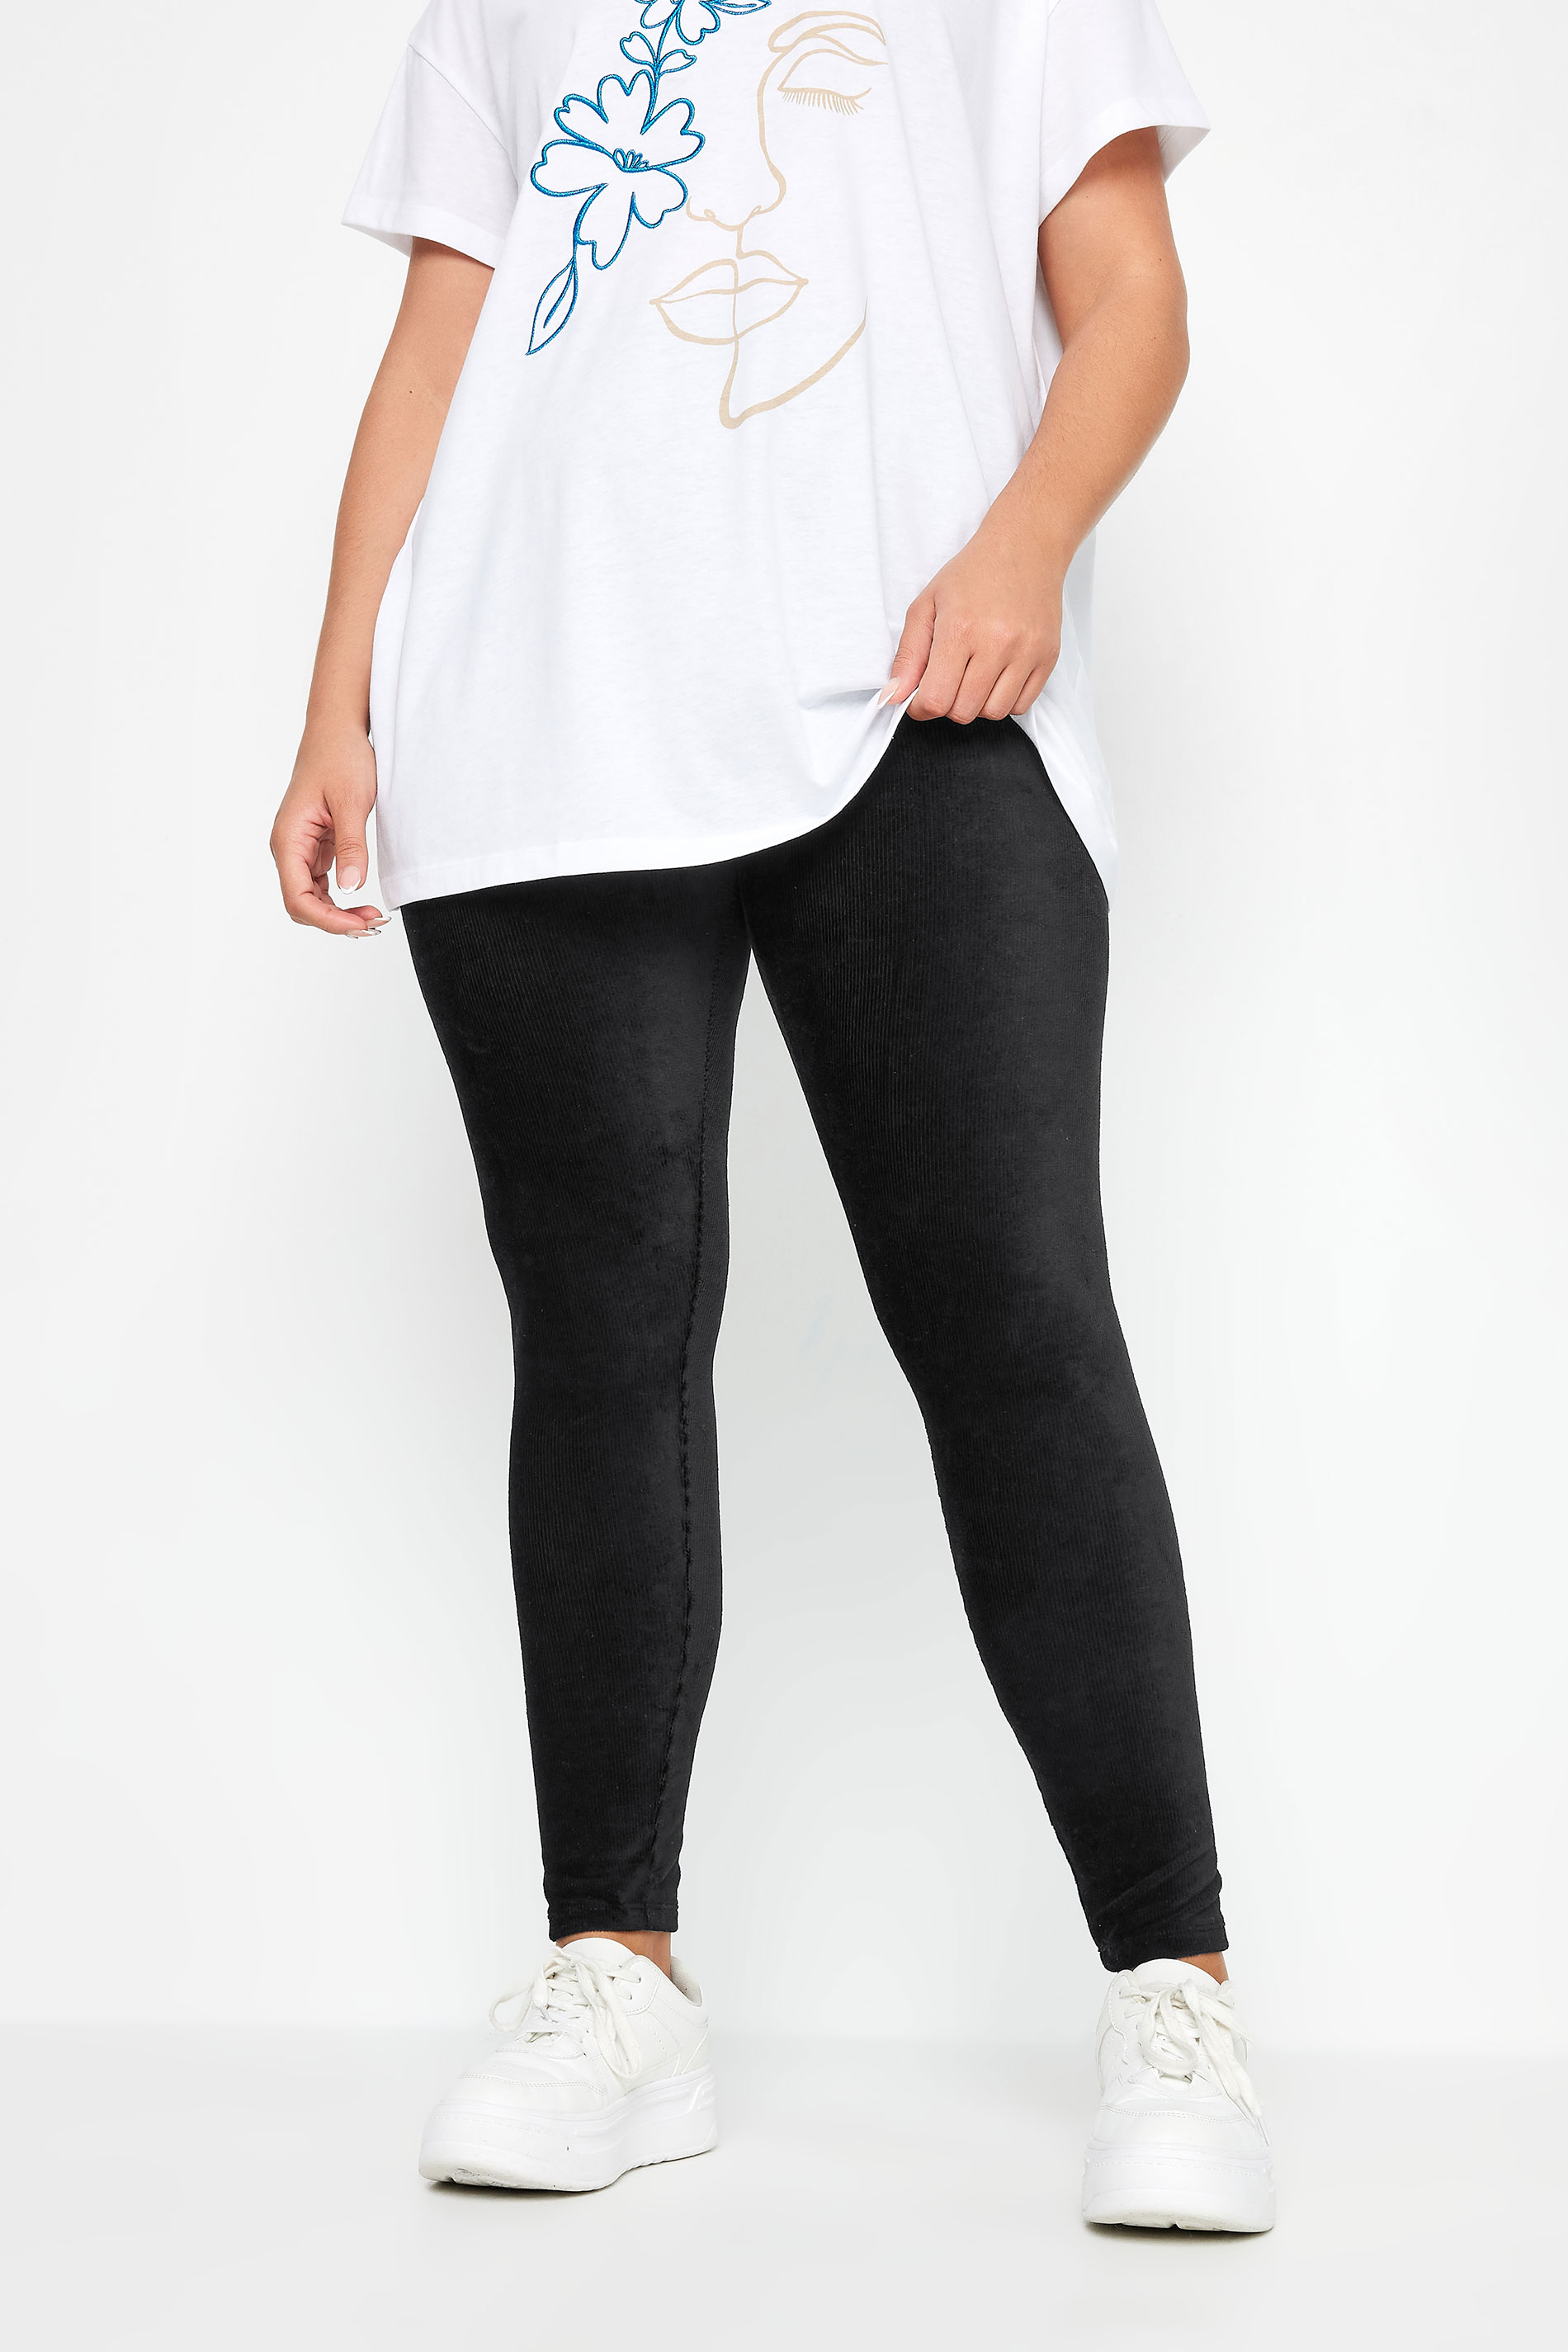 Plus Size Black Cord Leggings | Yours Clothing 1